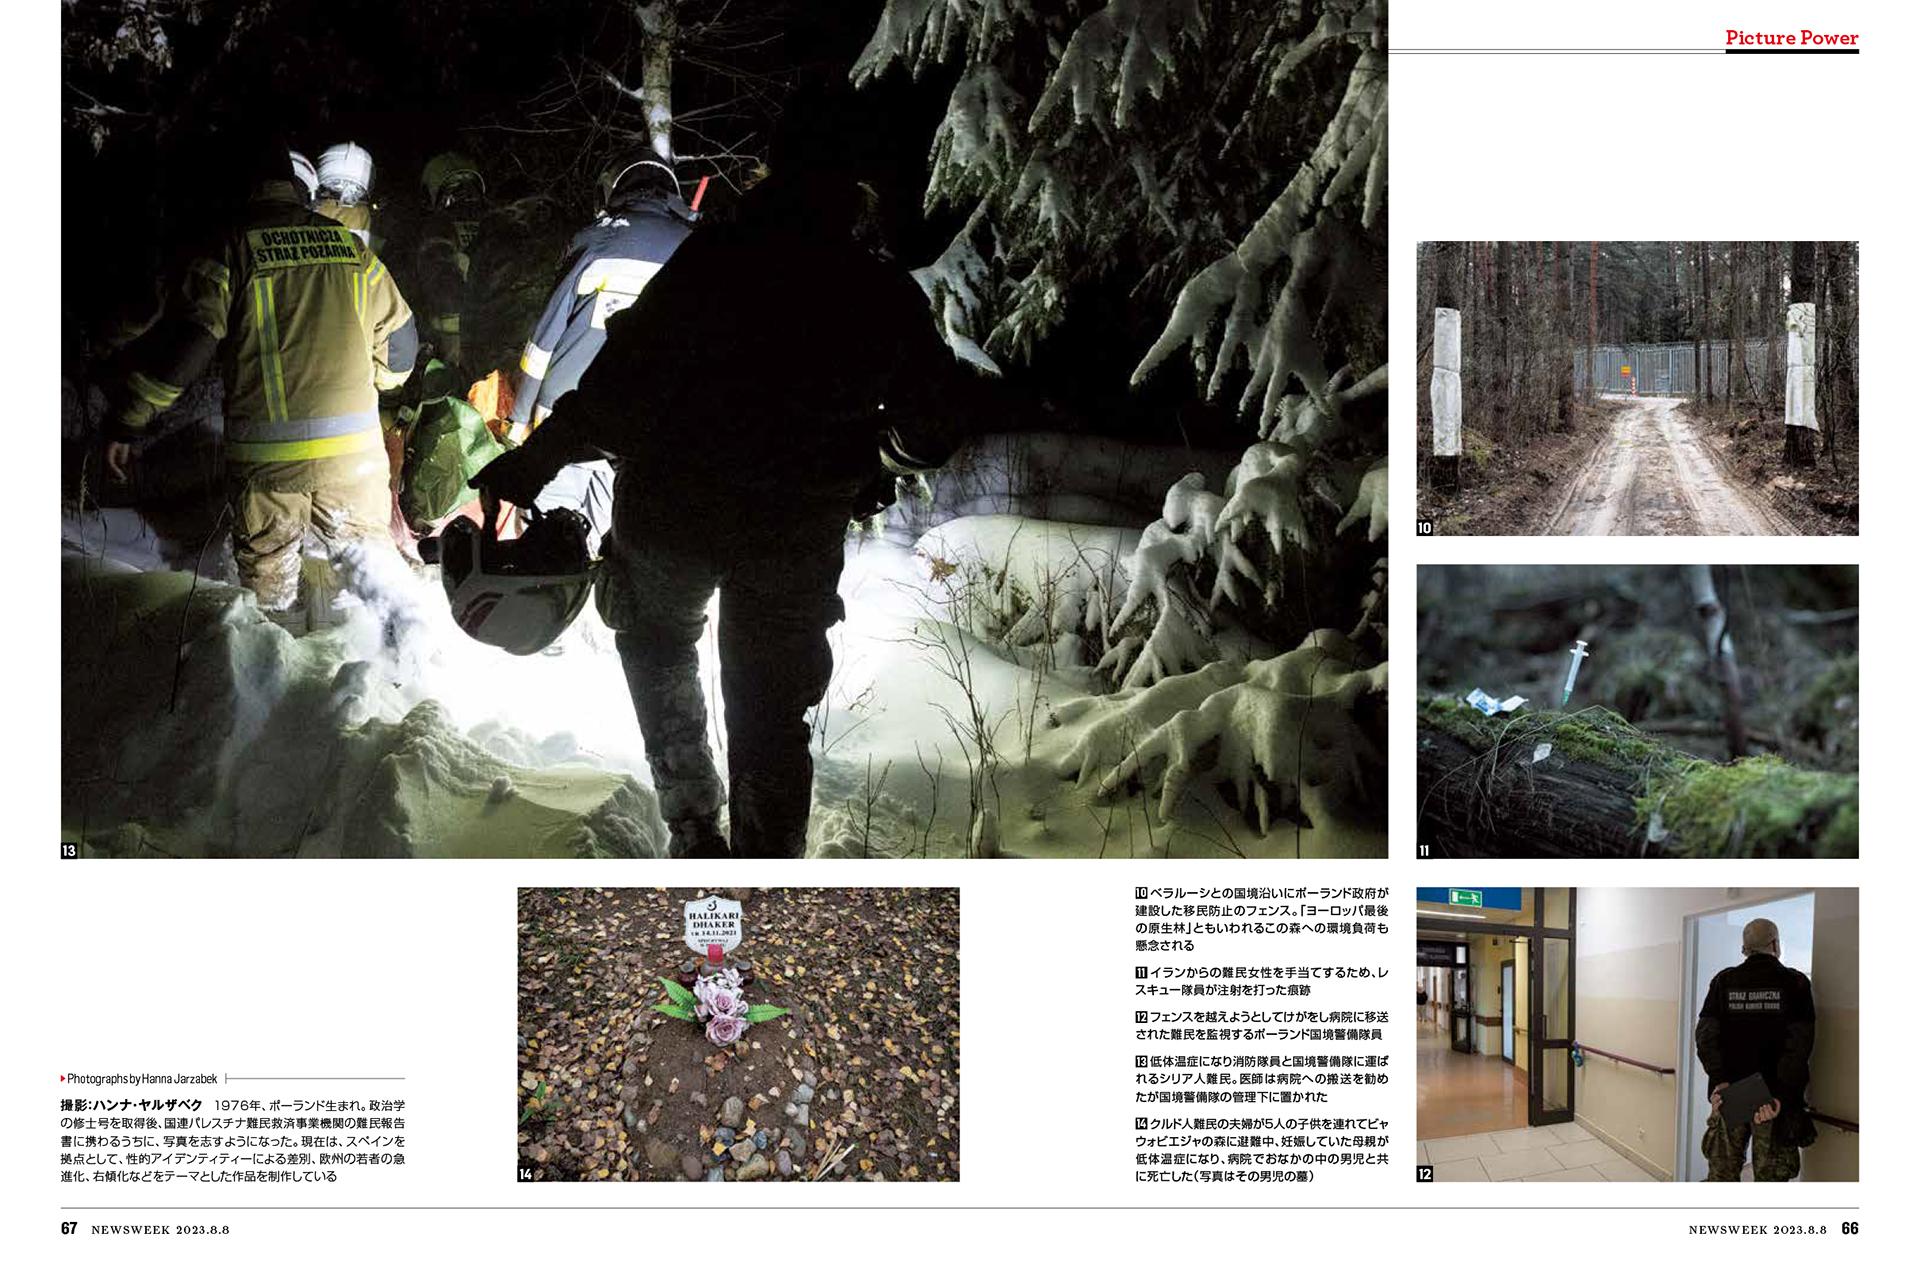 Art and Documentary Photography - Loading NewsweekJapan-3.jpg